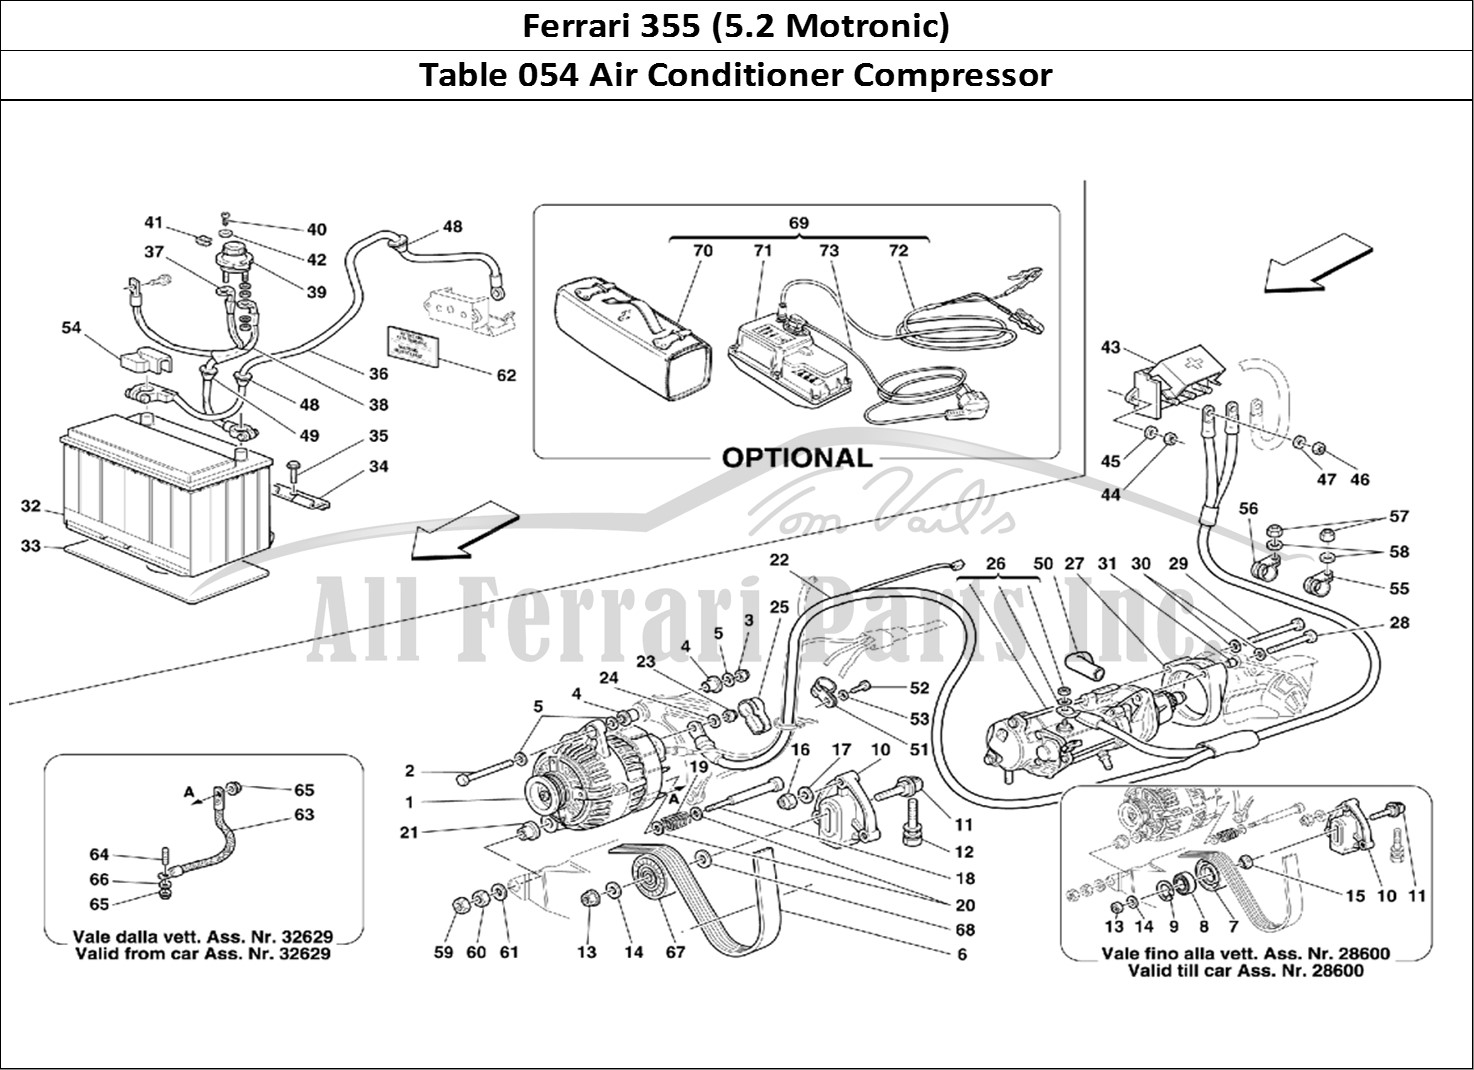 Ferrari Parts Ferrari 355 (5.2 Motronic) Page 054 Air Conditioning Compress